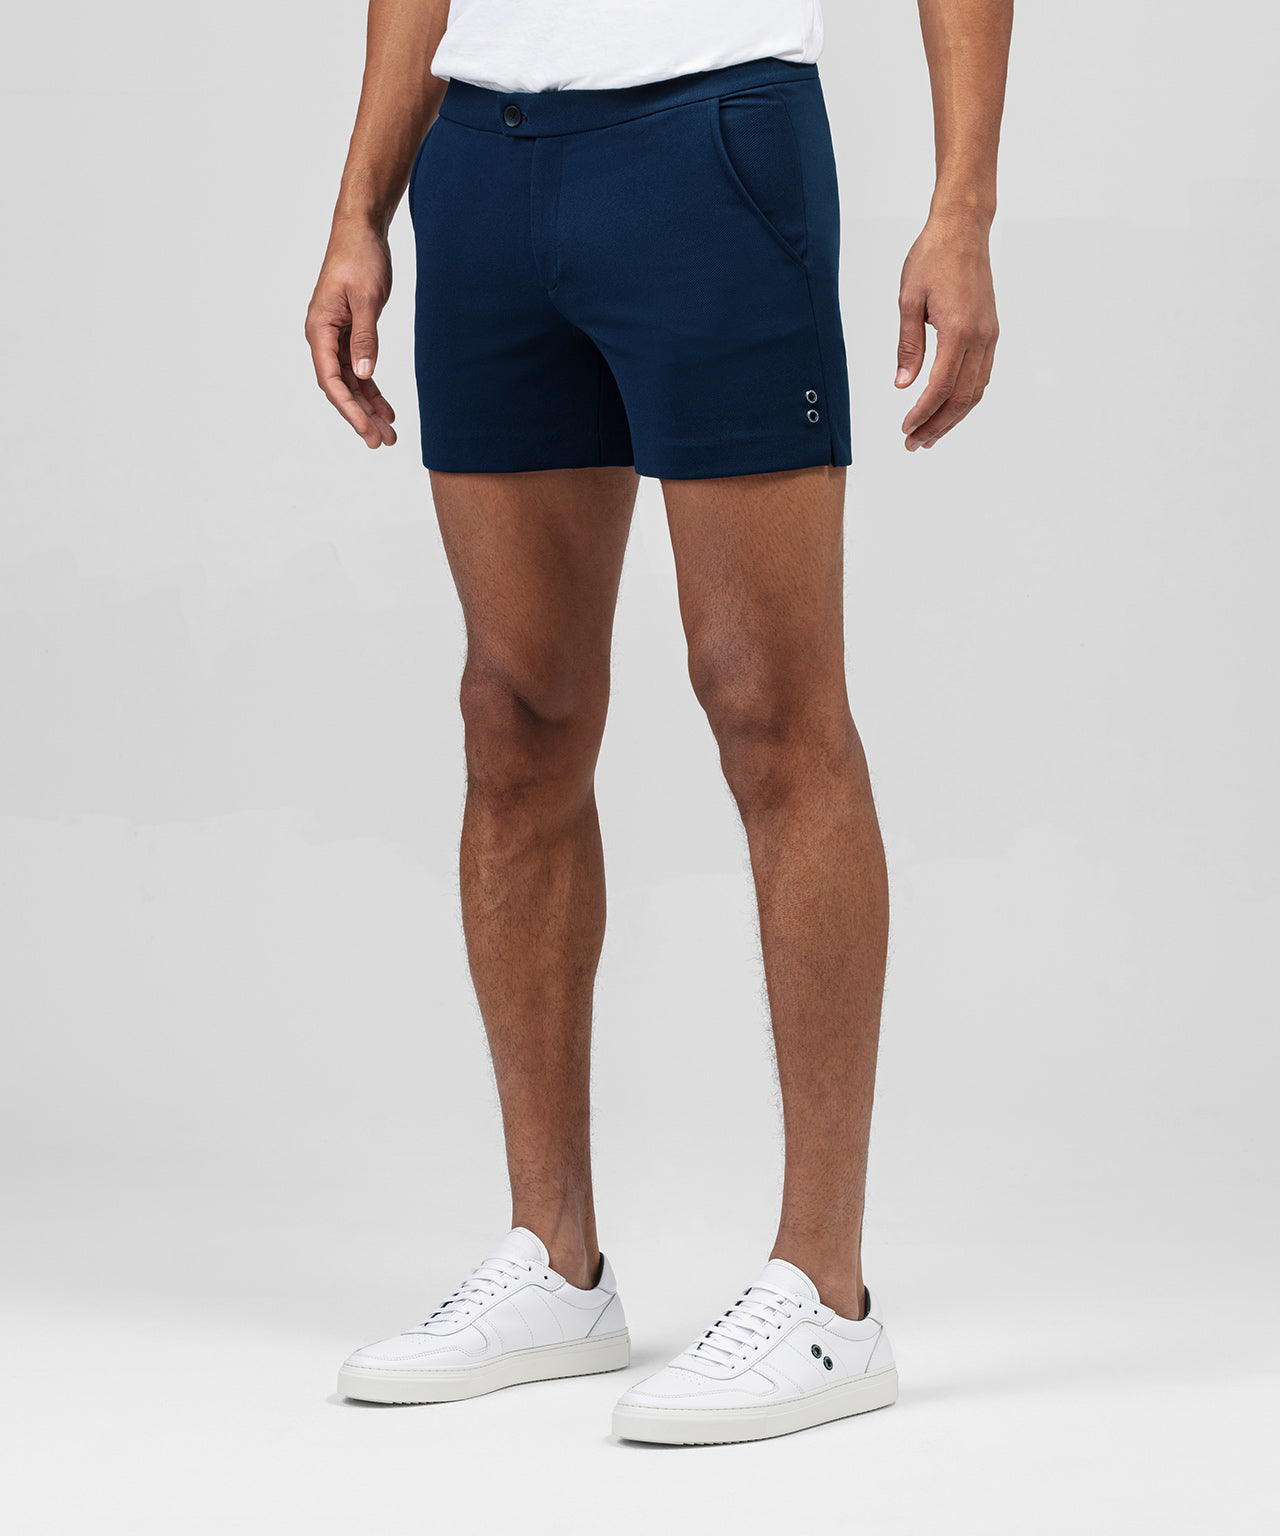 Tennis Shorts: Navy